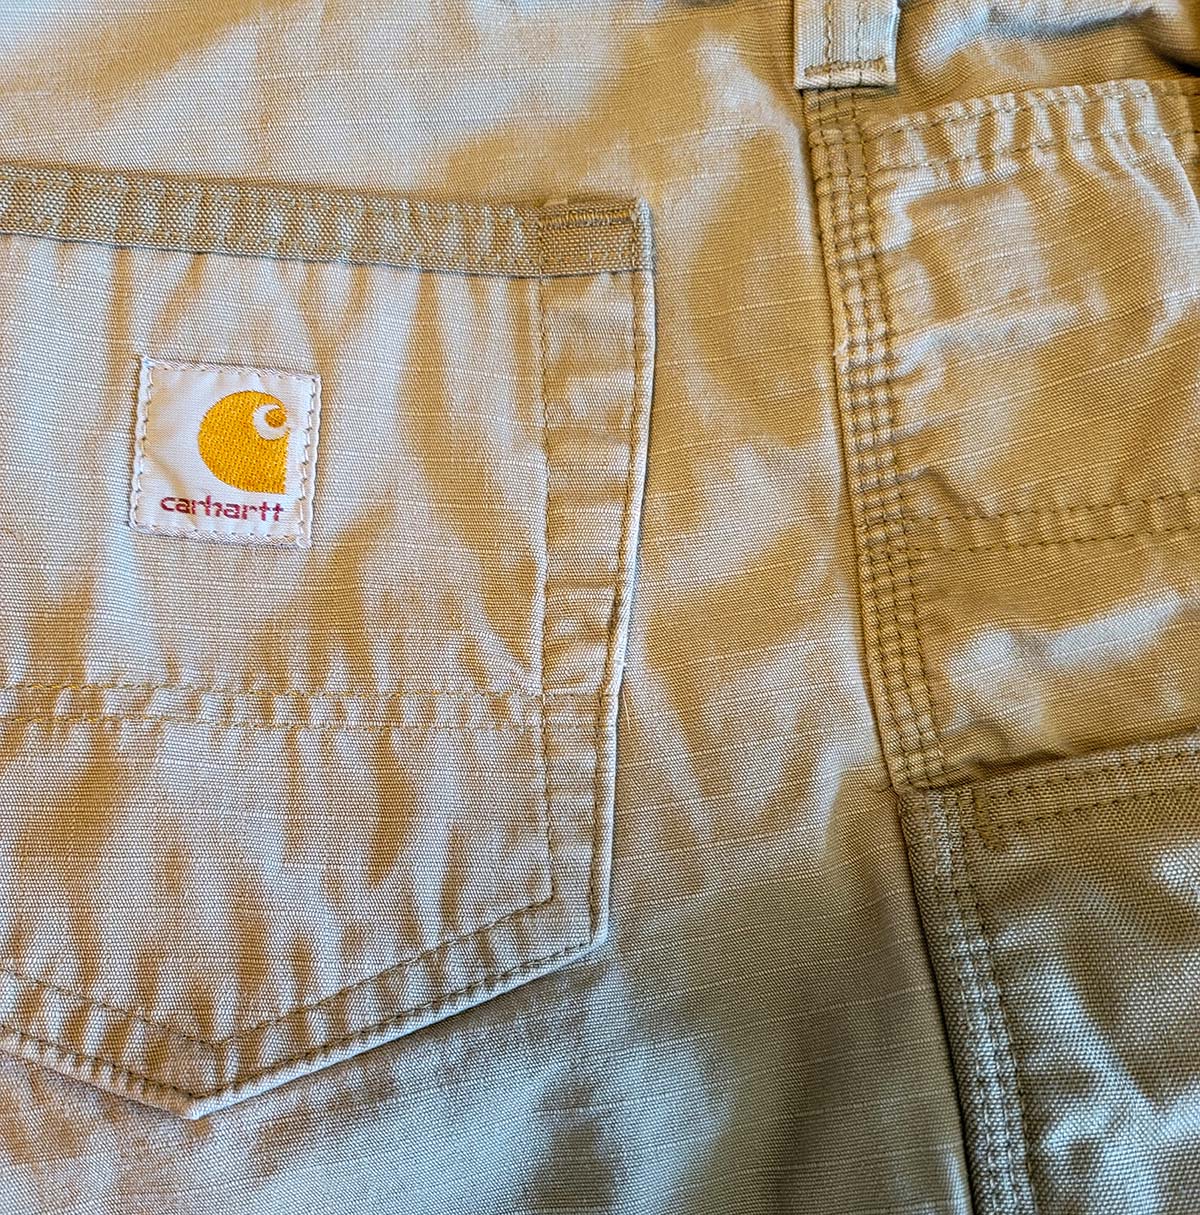 Closeup of Carhartt cargo pants back pocket with logo